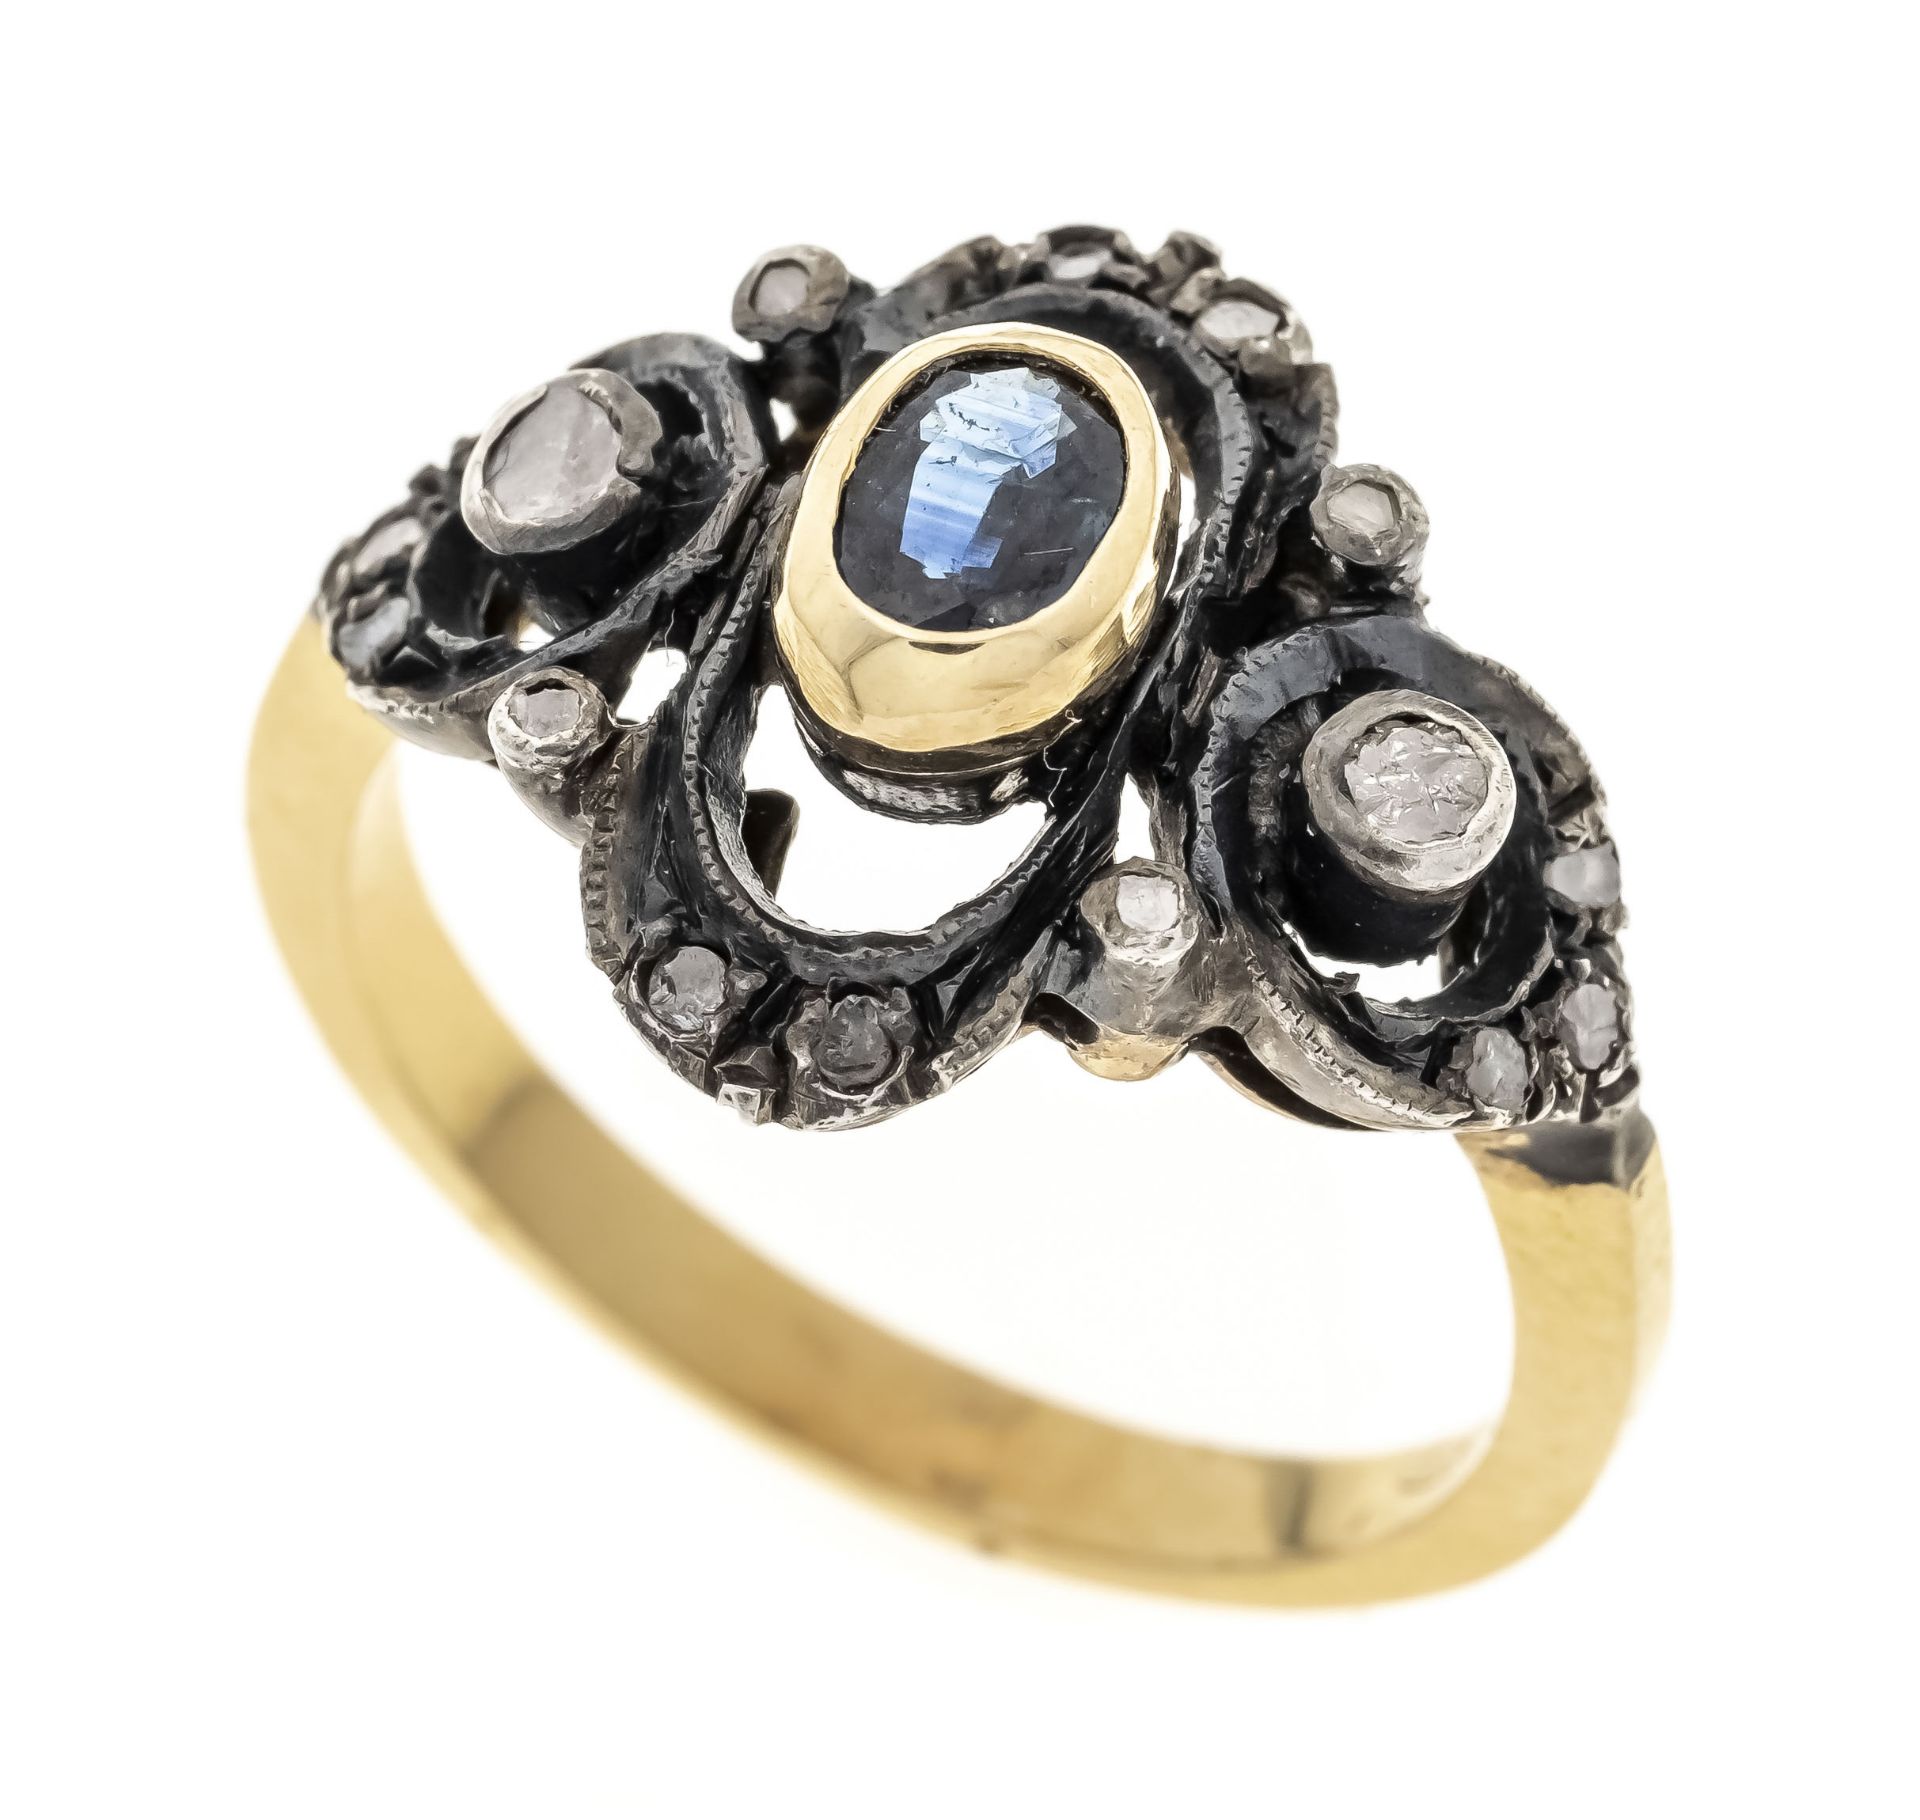 Saphir-Diamant-Ring GG 585/000